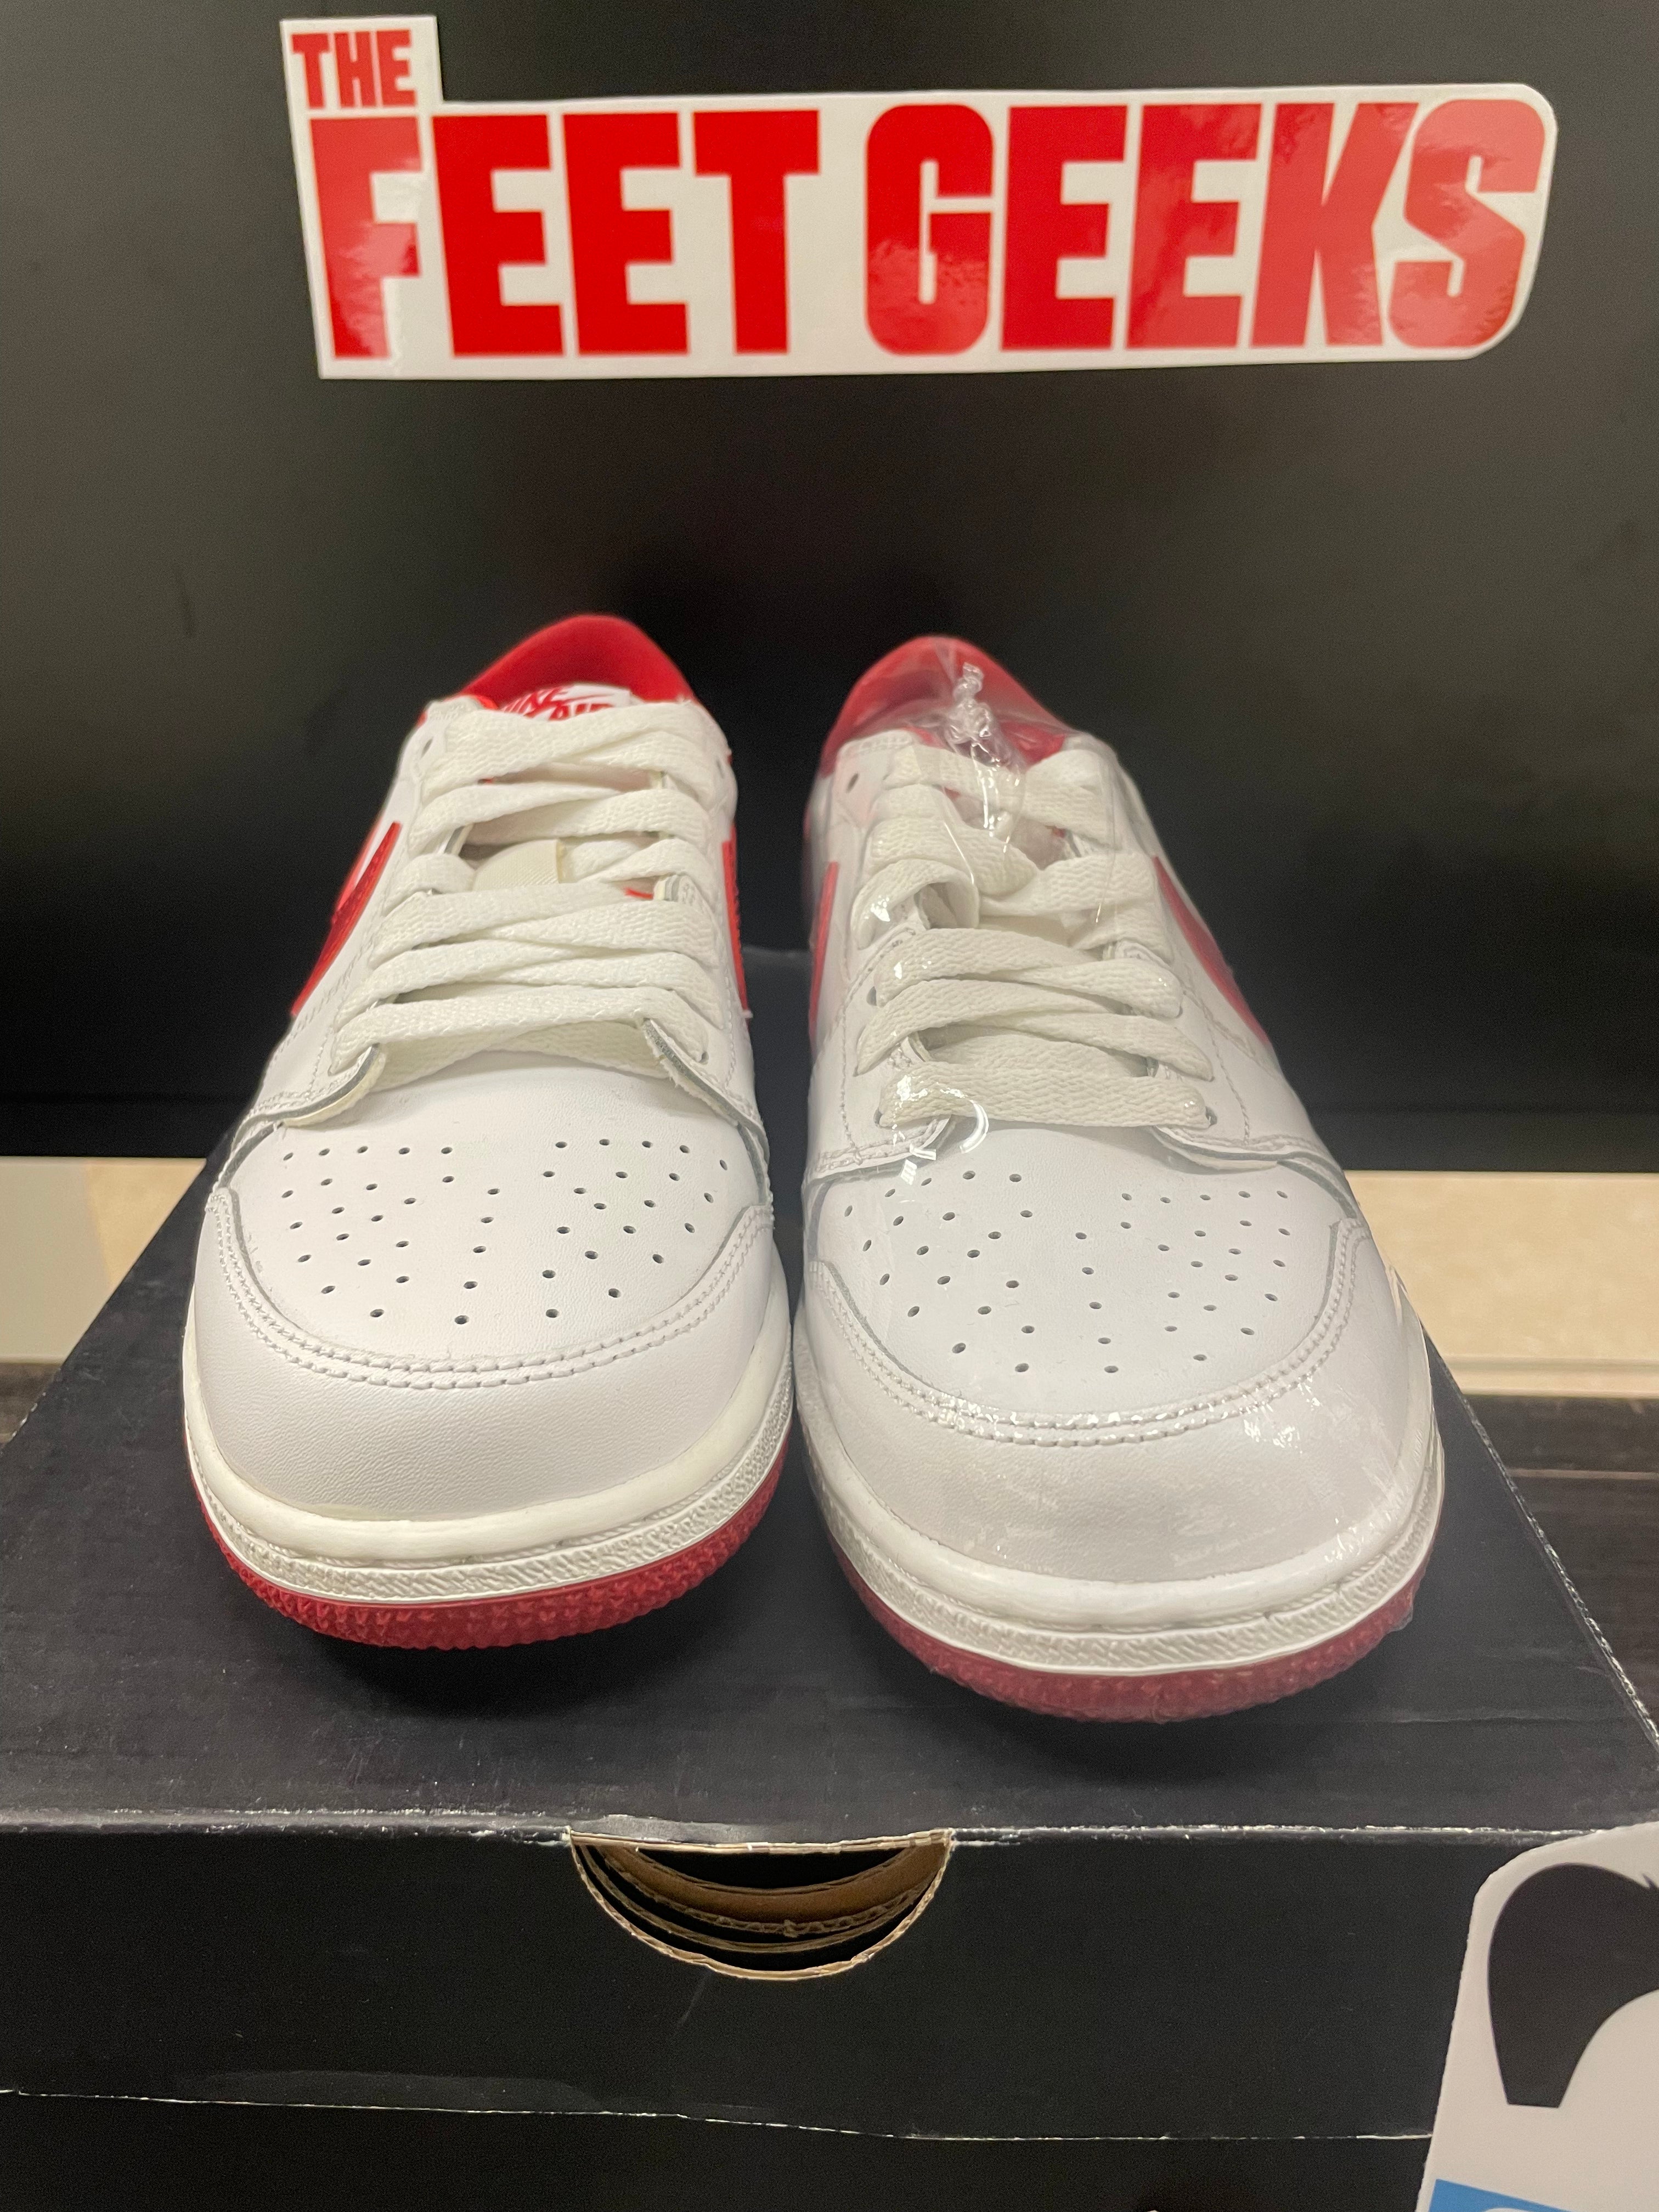 Air Jordan 1 low white/varsity red gs shoe new